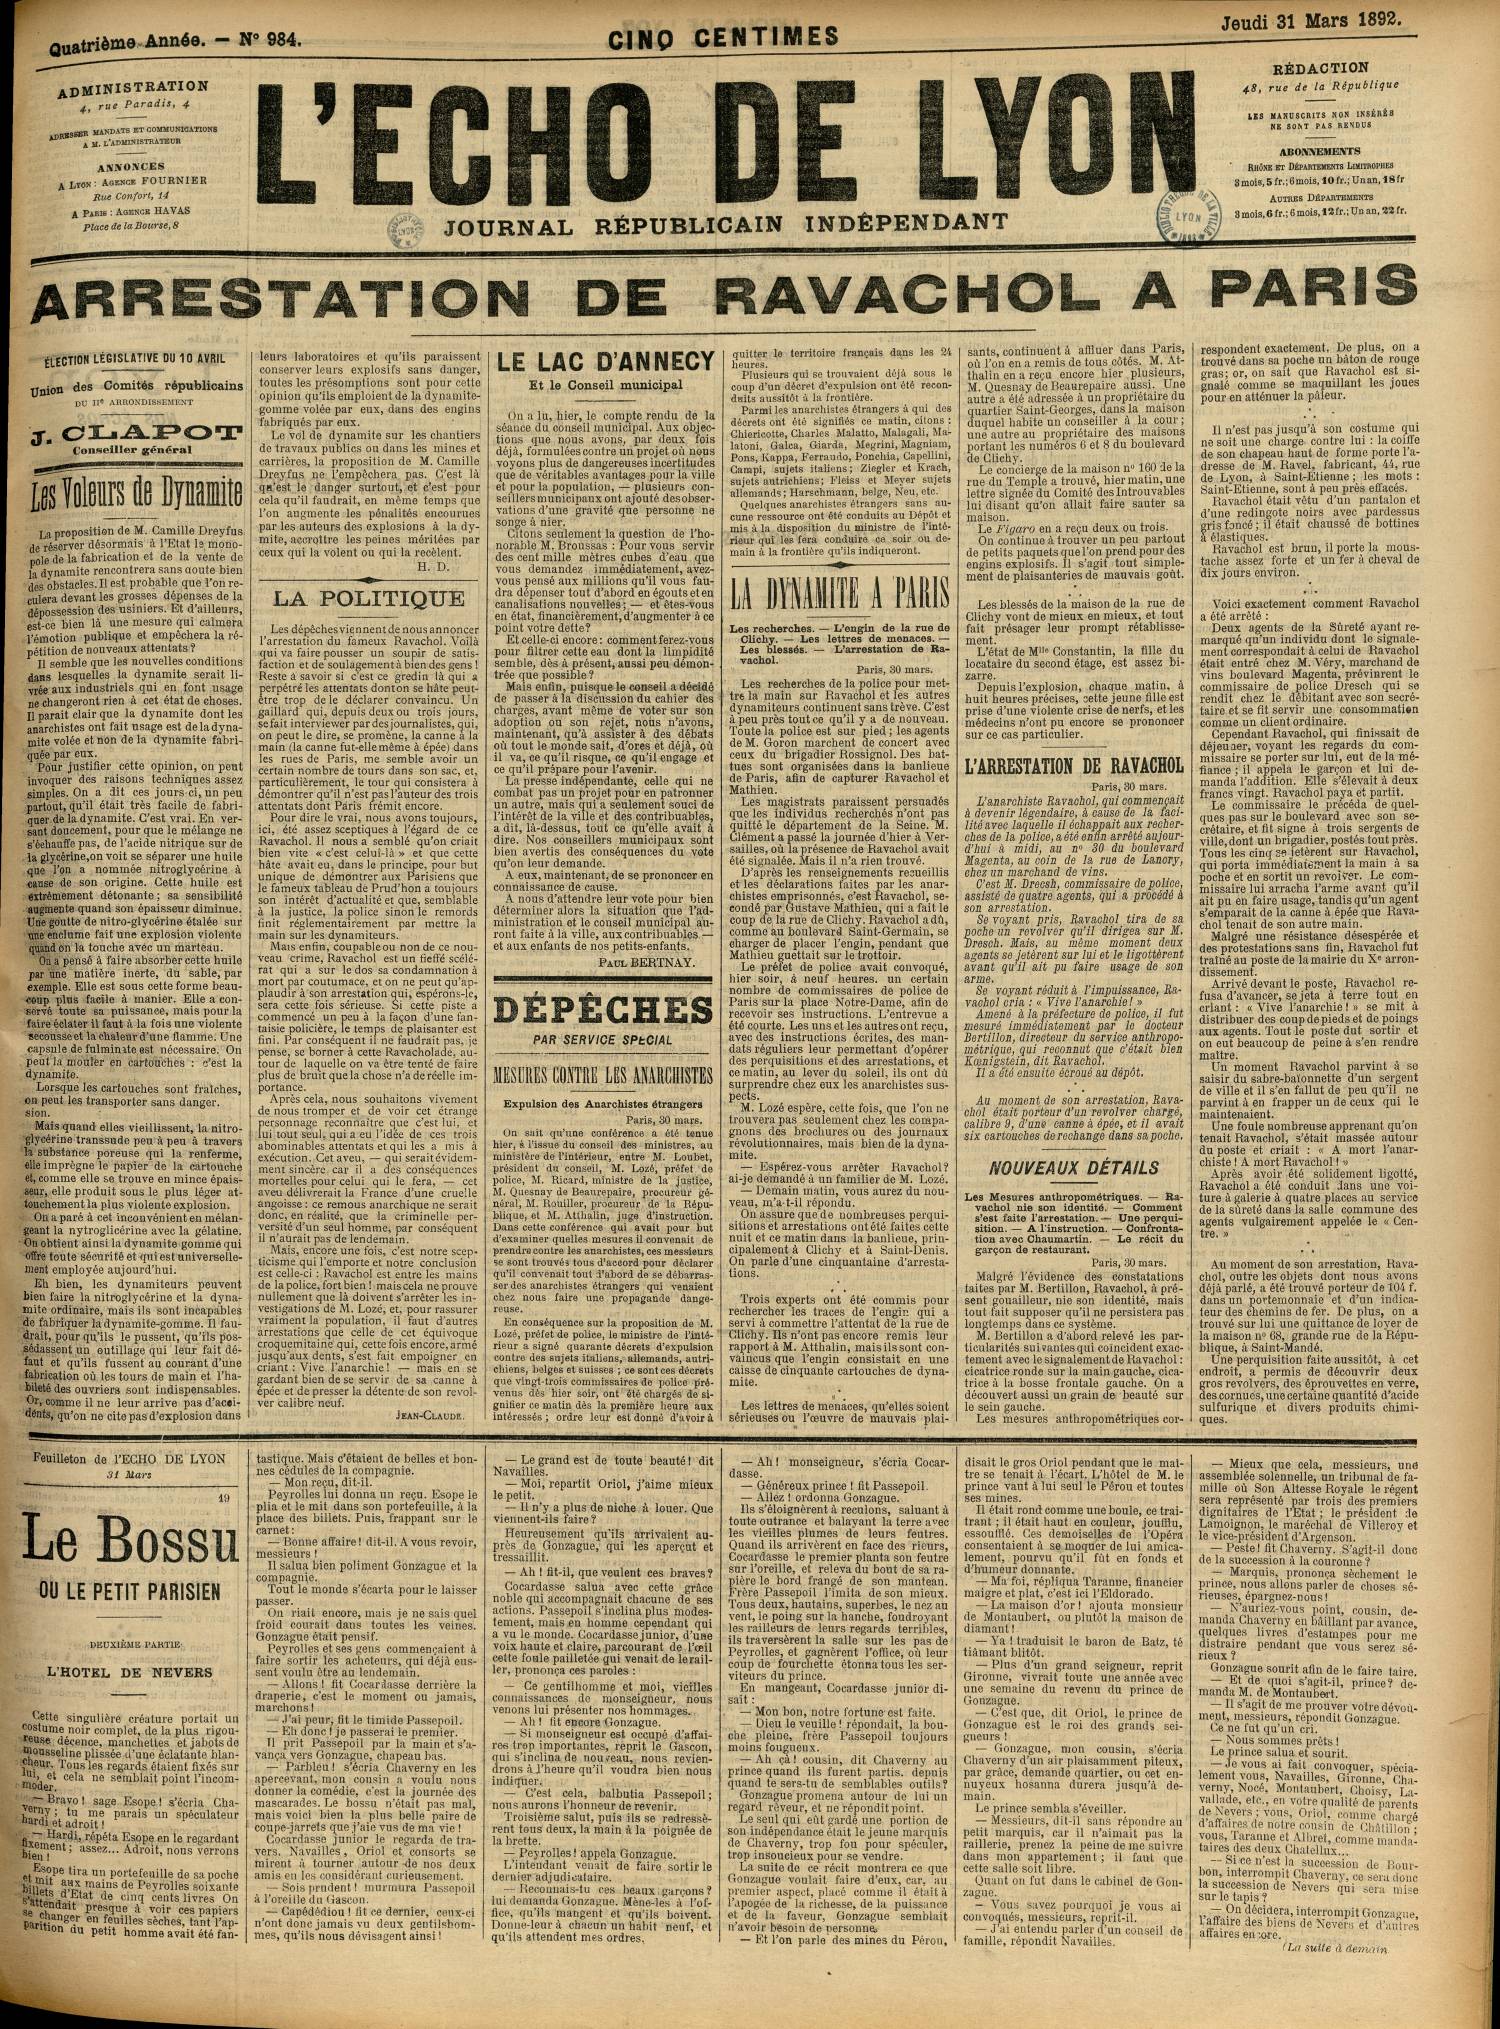 Contenu textuel de l'image : L'ARRESTATION DE RAVACHOL 